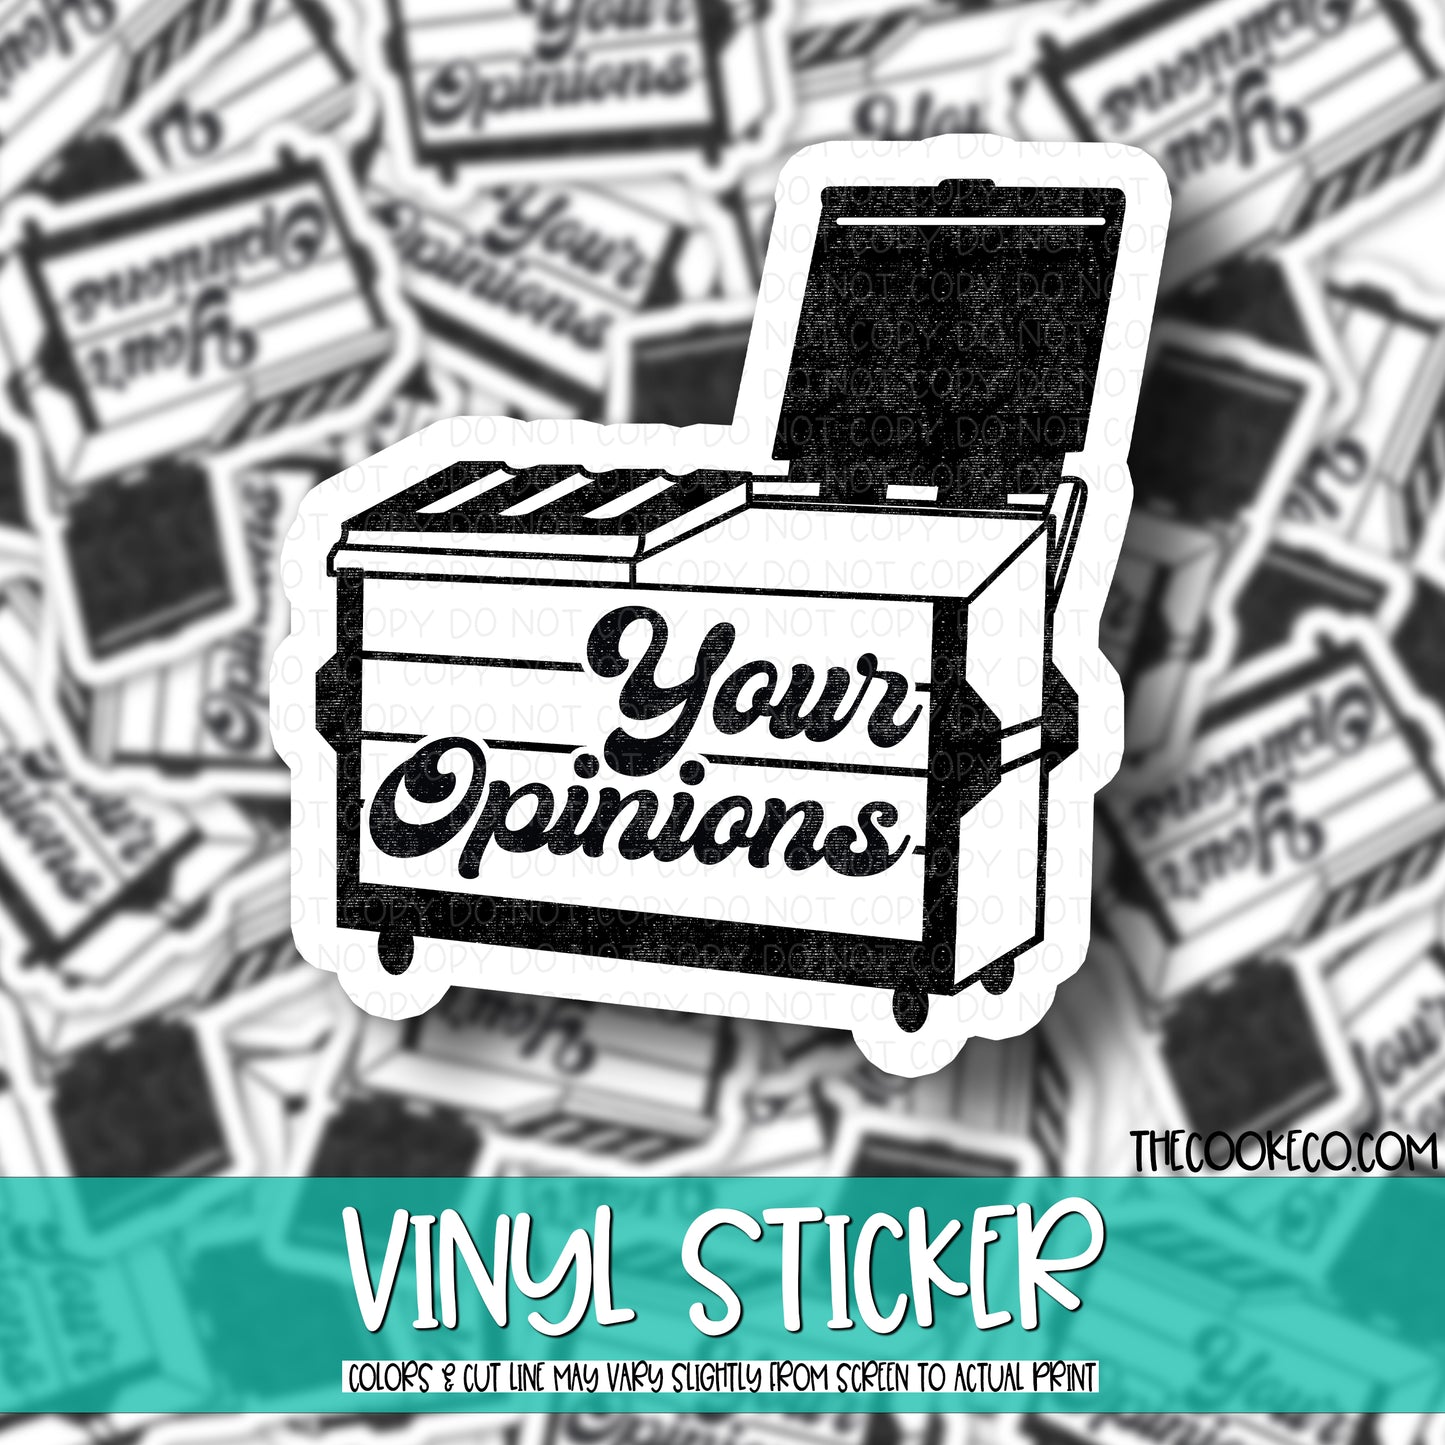 Vinyl Sticker | #V0606 - YOUR OPINIONS